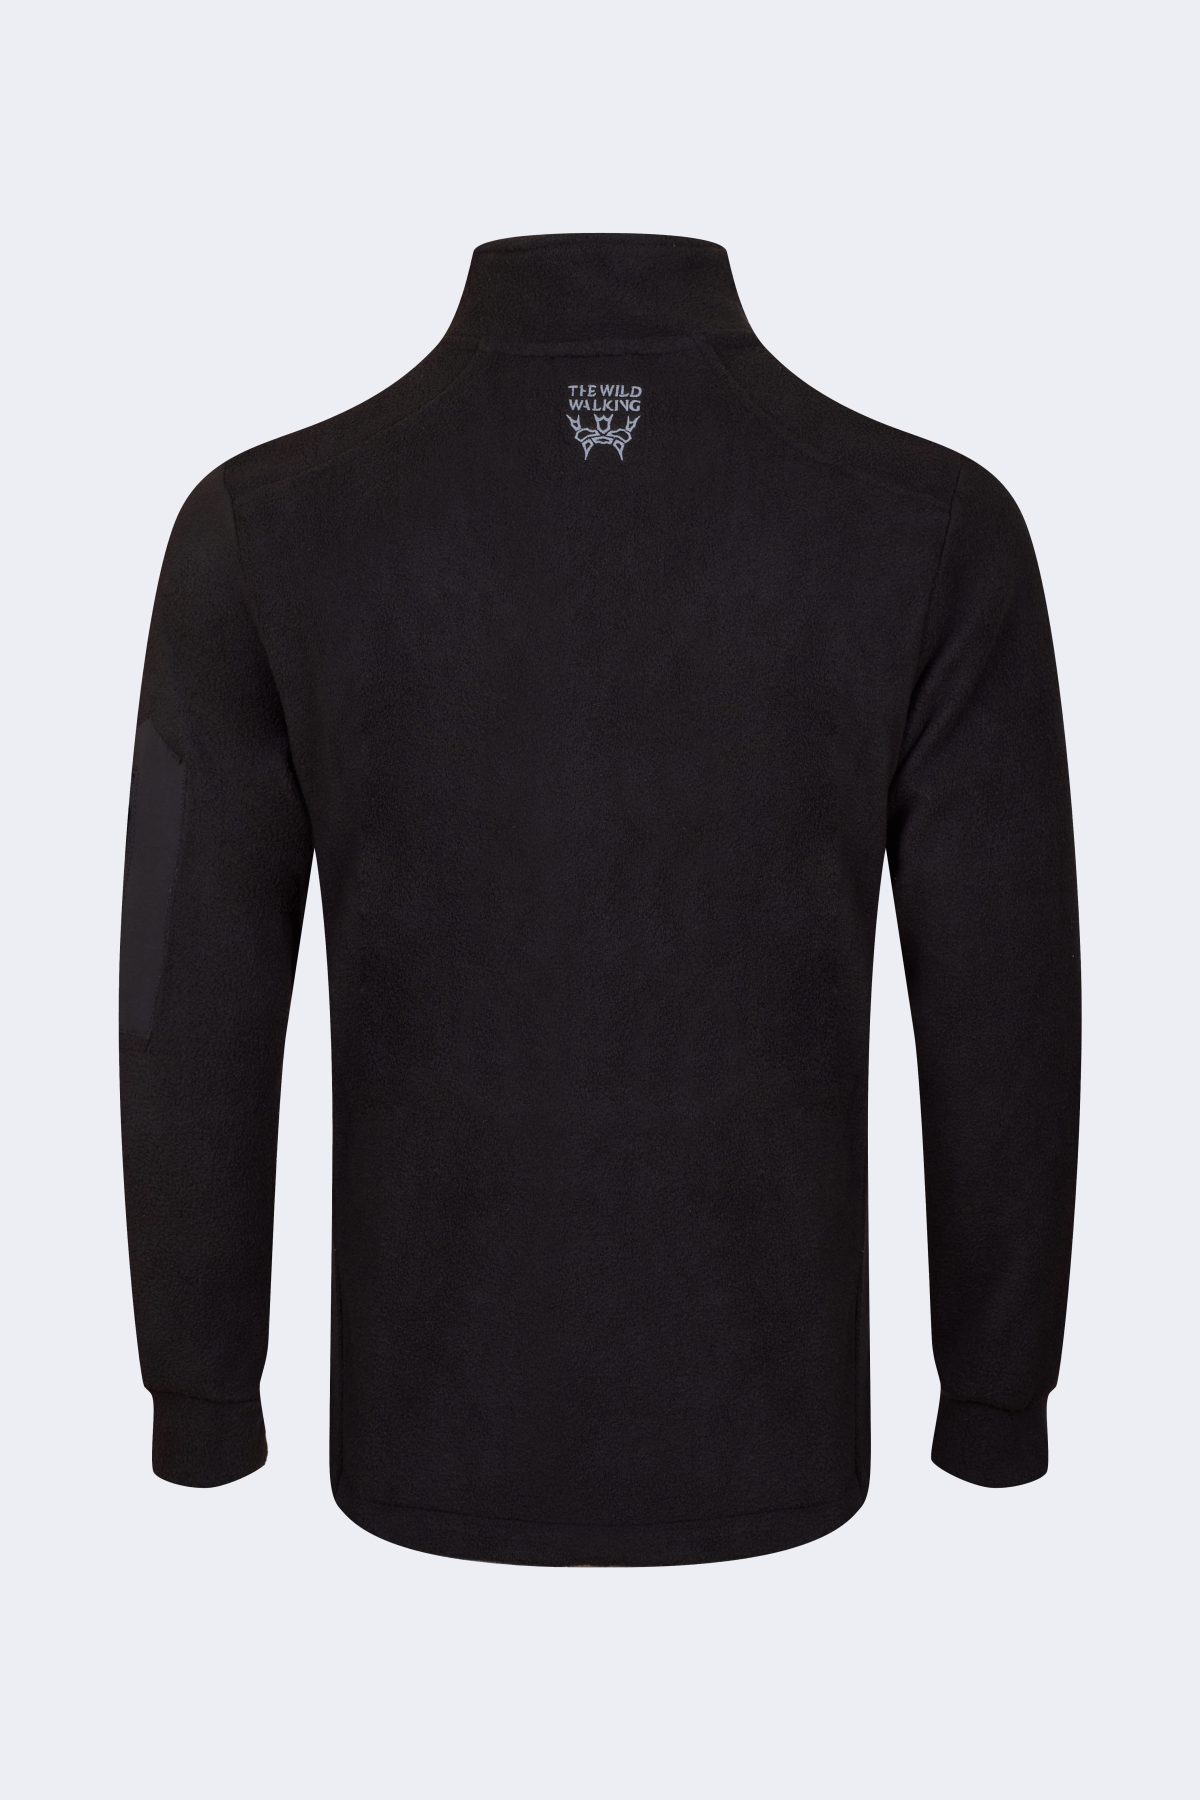 Stylish Fleece with Embroidered Logo and Sleeve Pocket – Black-3504